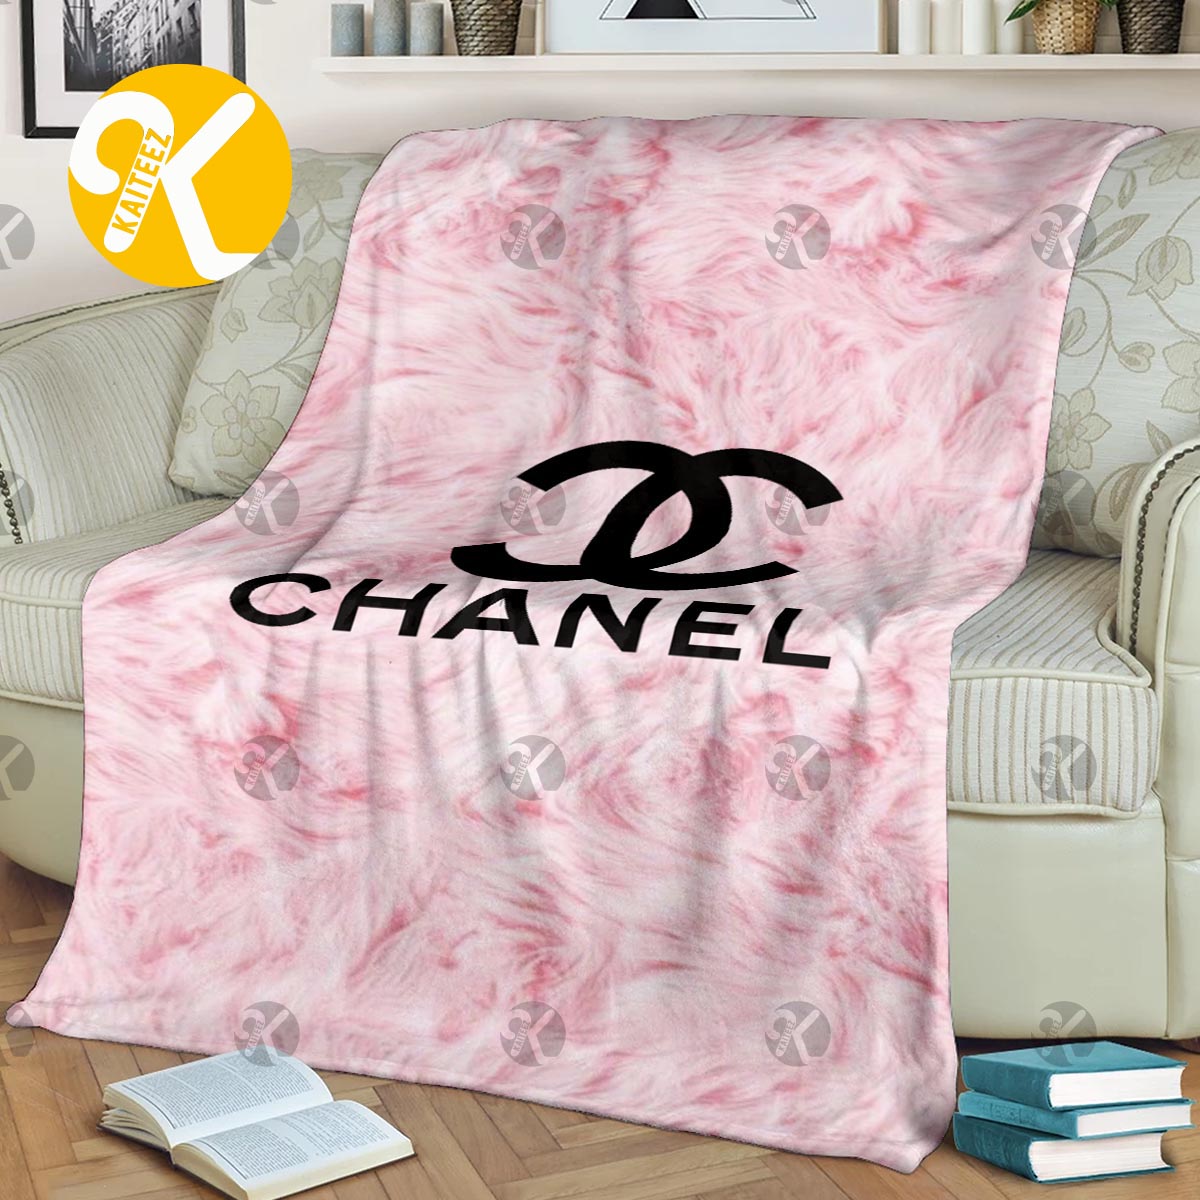 pink chanel blanket